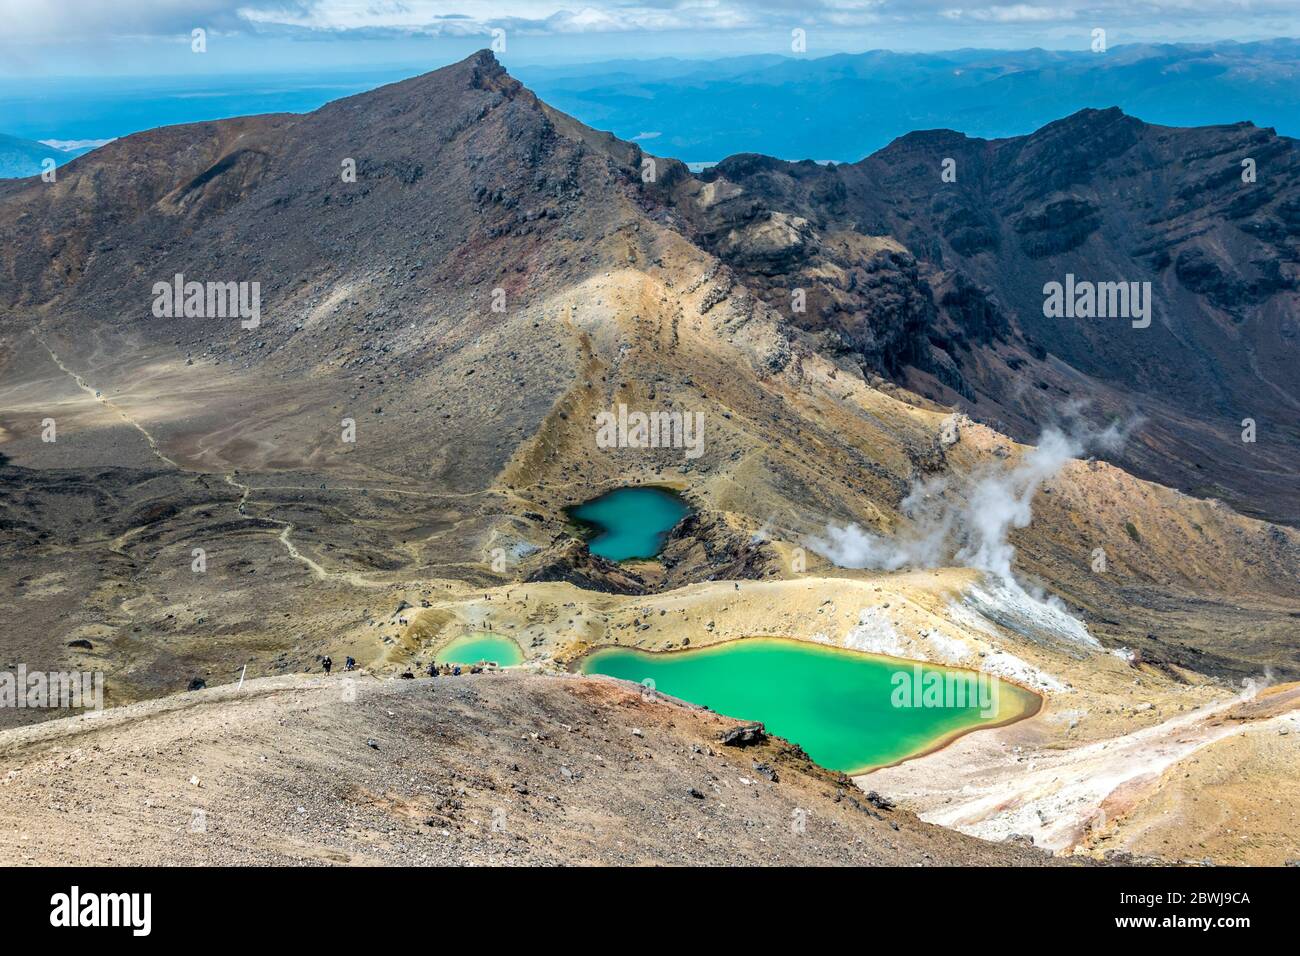 Emerald lakes are volcanic lakes on top of the tongariro volcanic massive, Tongariro crossing, New Zealand Stock Photo